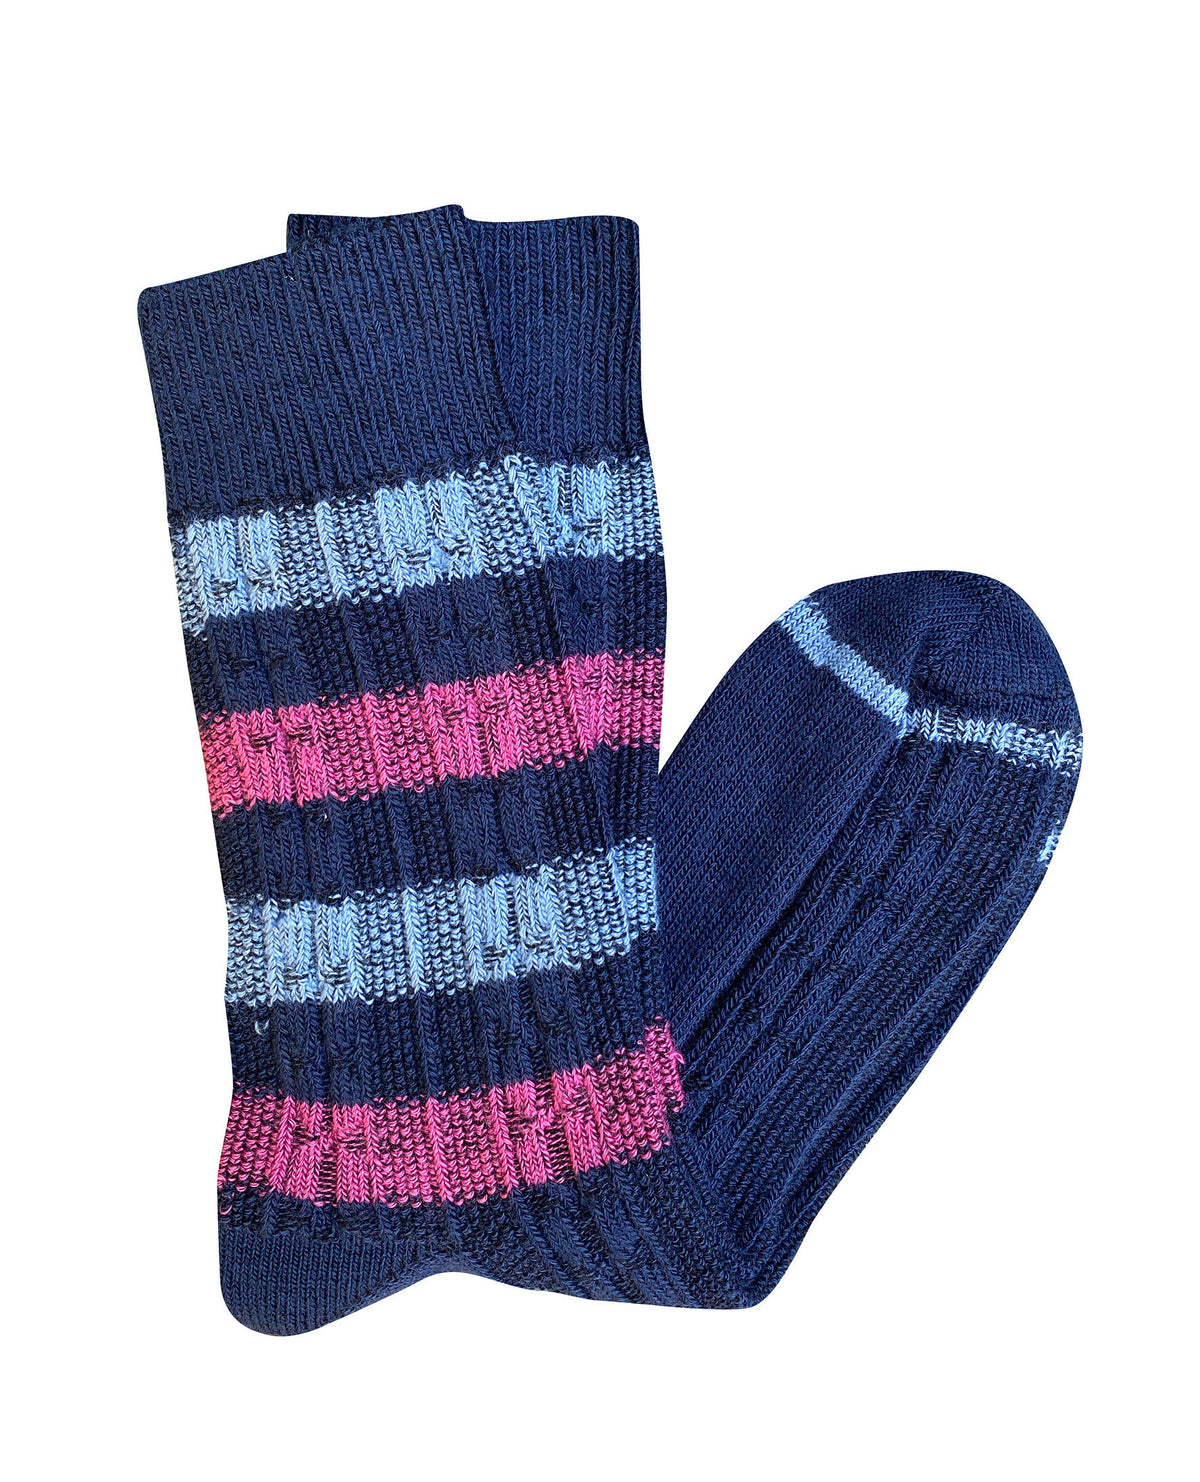 Tightology – Chunky Cable Blue Socks